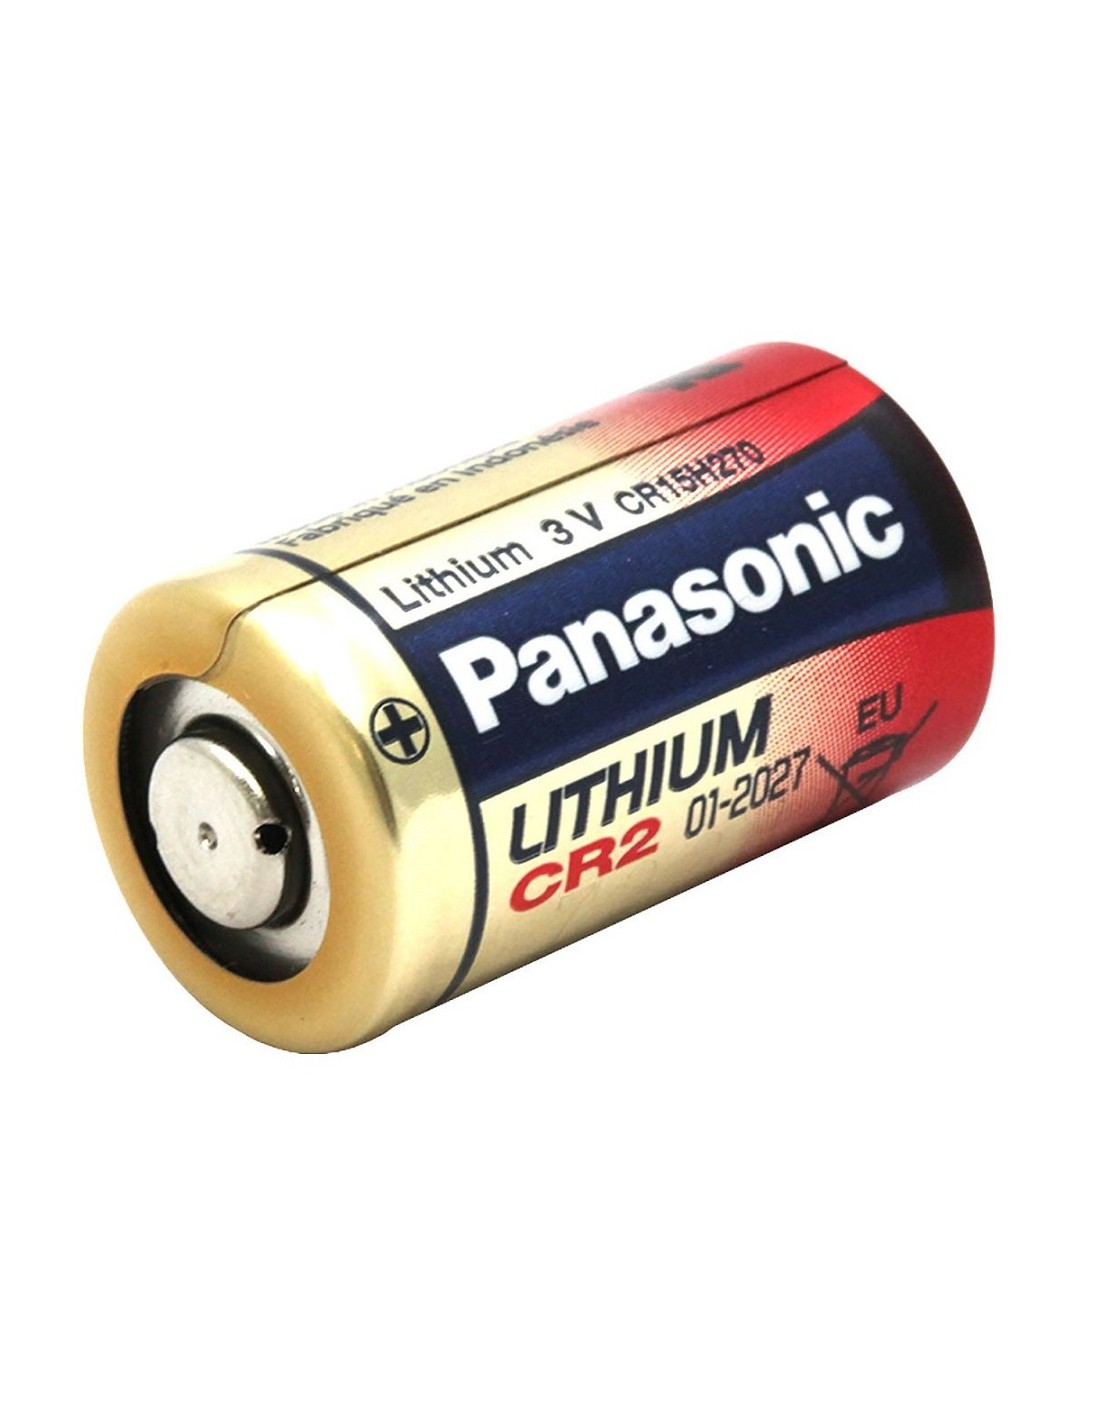 CR123A CR123 Panasonic 3V Battery (12 Pieces) -3 Volt Lithium-Camera, Photo